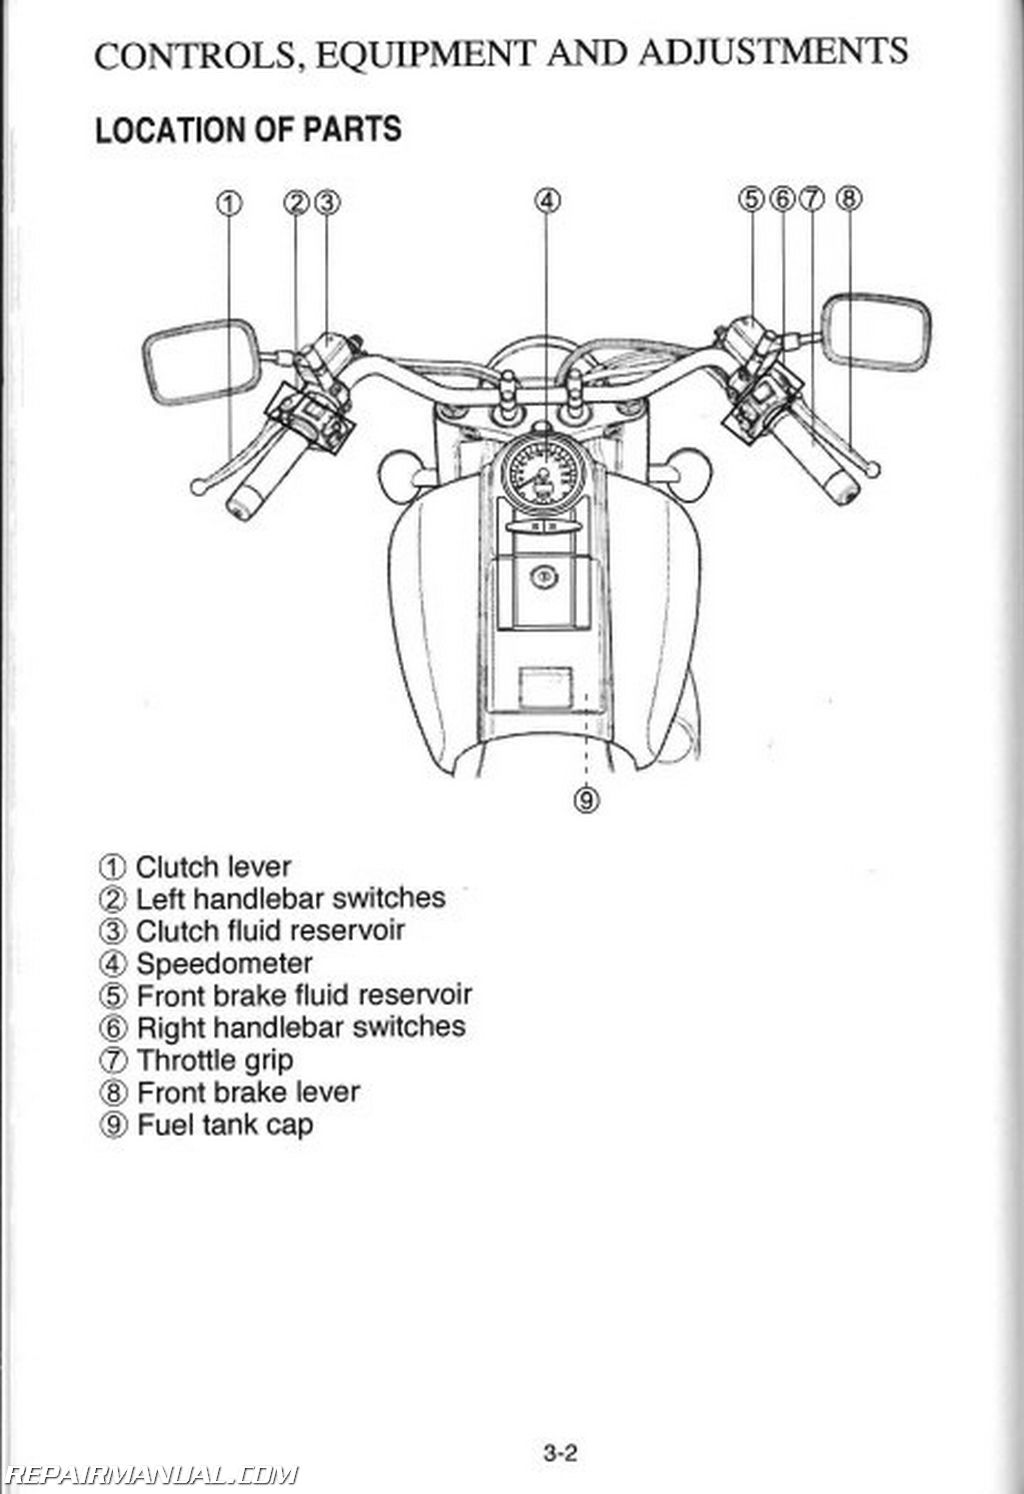 Wiring Diagram For Suzuki 2007 C90 Fuel Pump from www.repairmanual.com